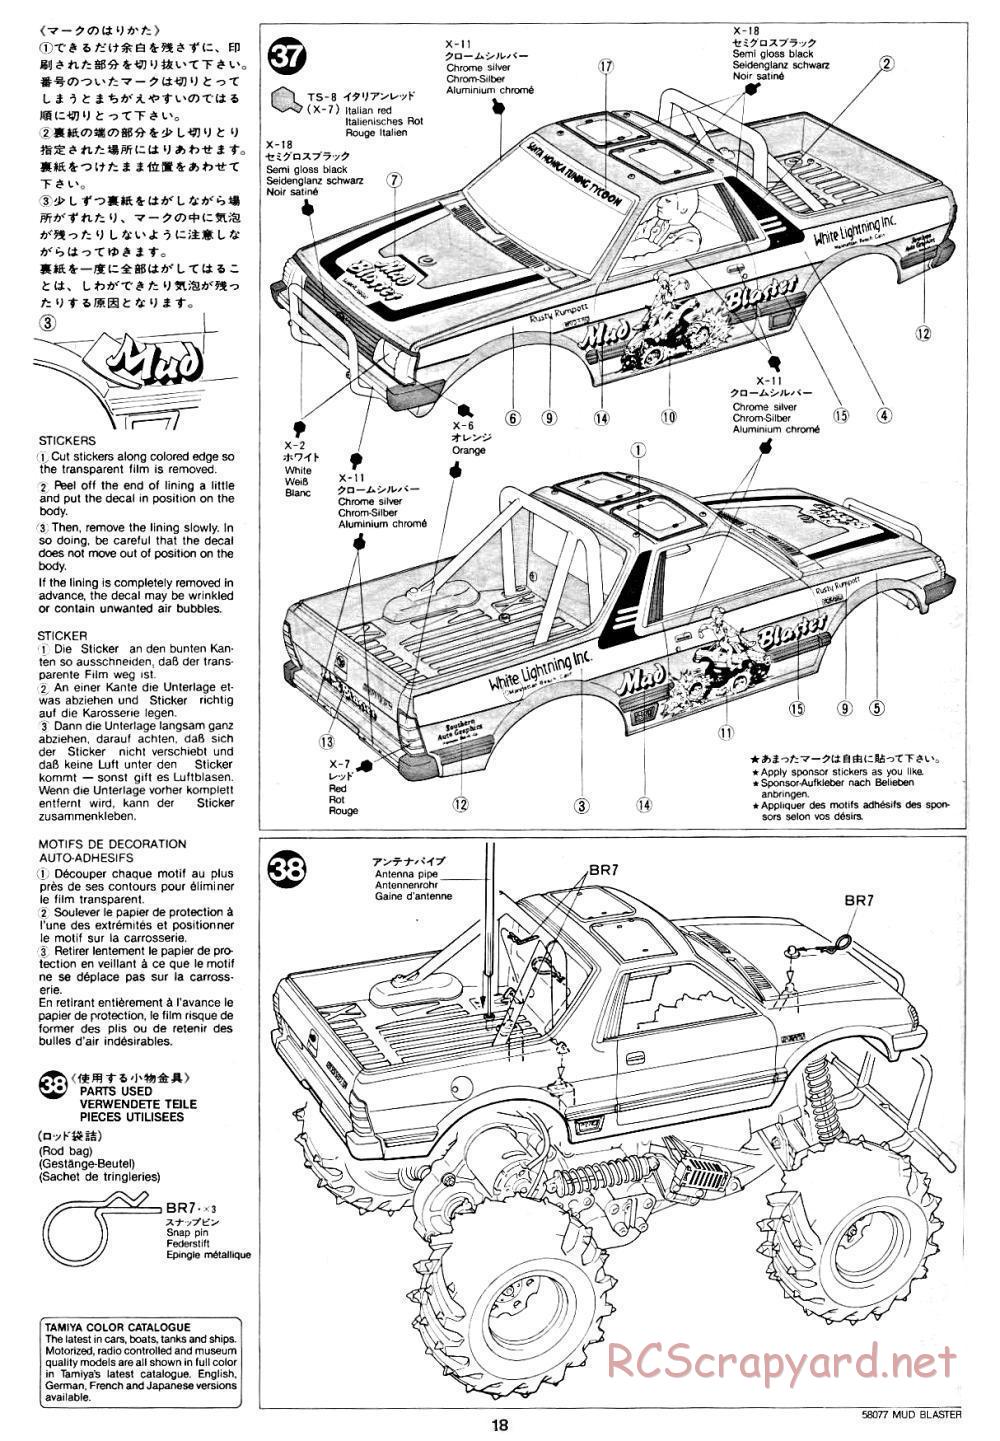 Tamiya - Mud Blaster - 58077 - Manual - Page 18